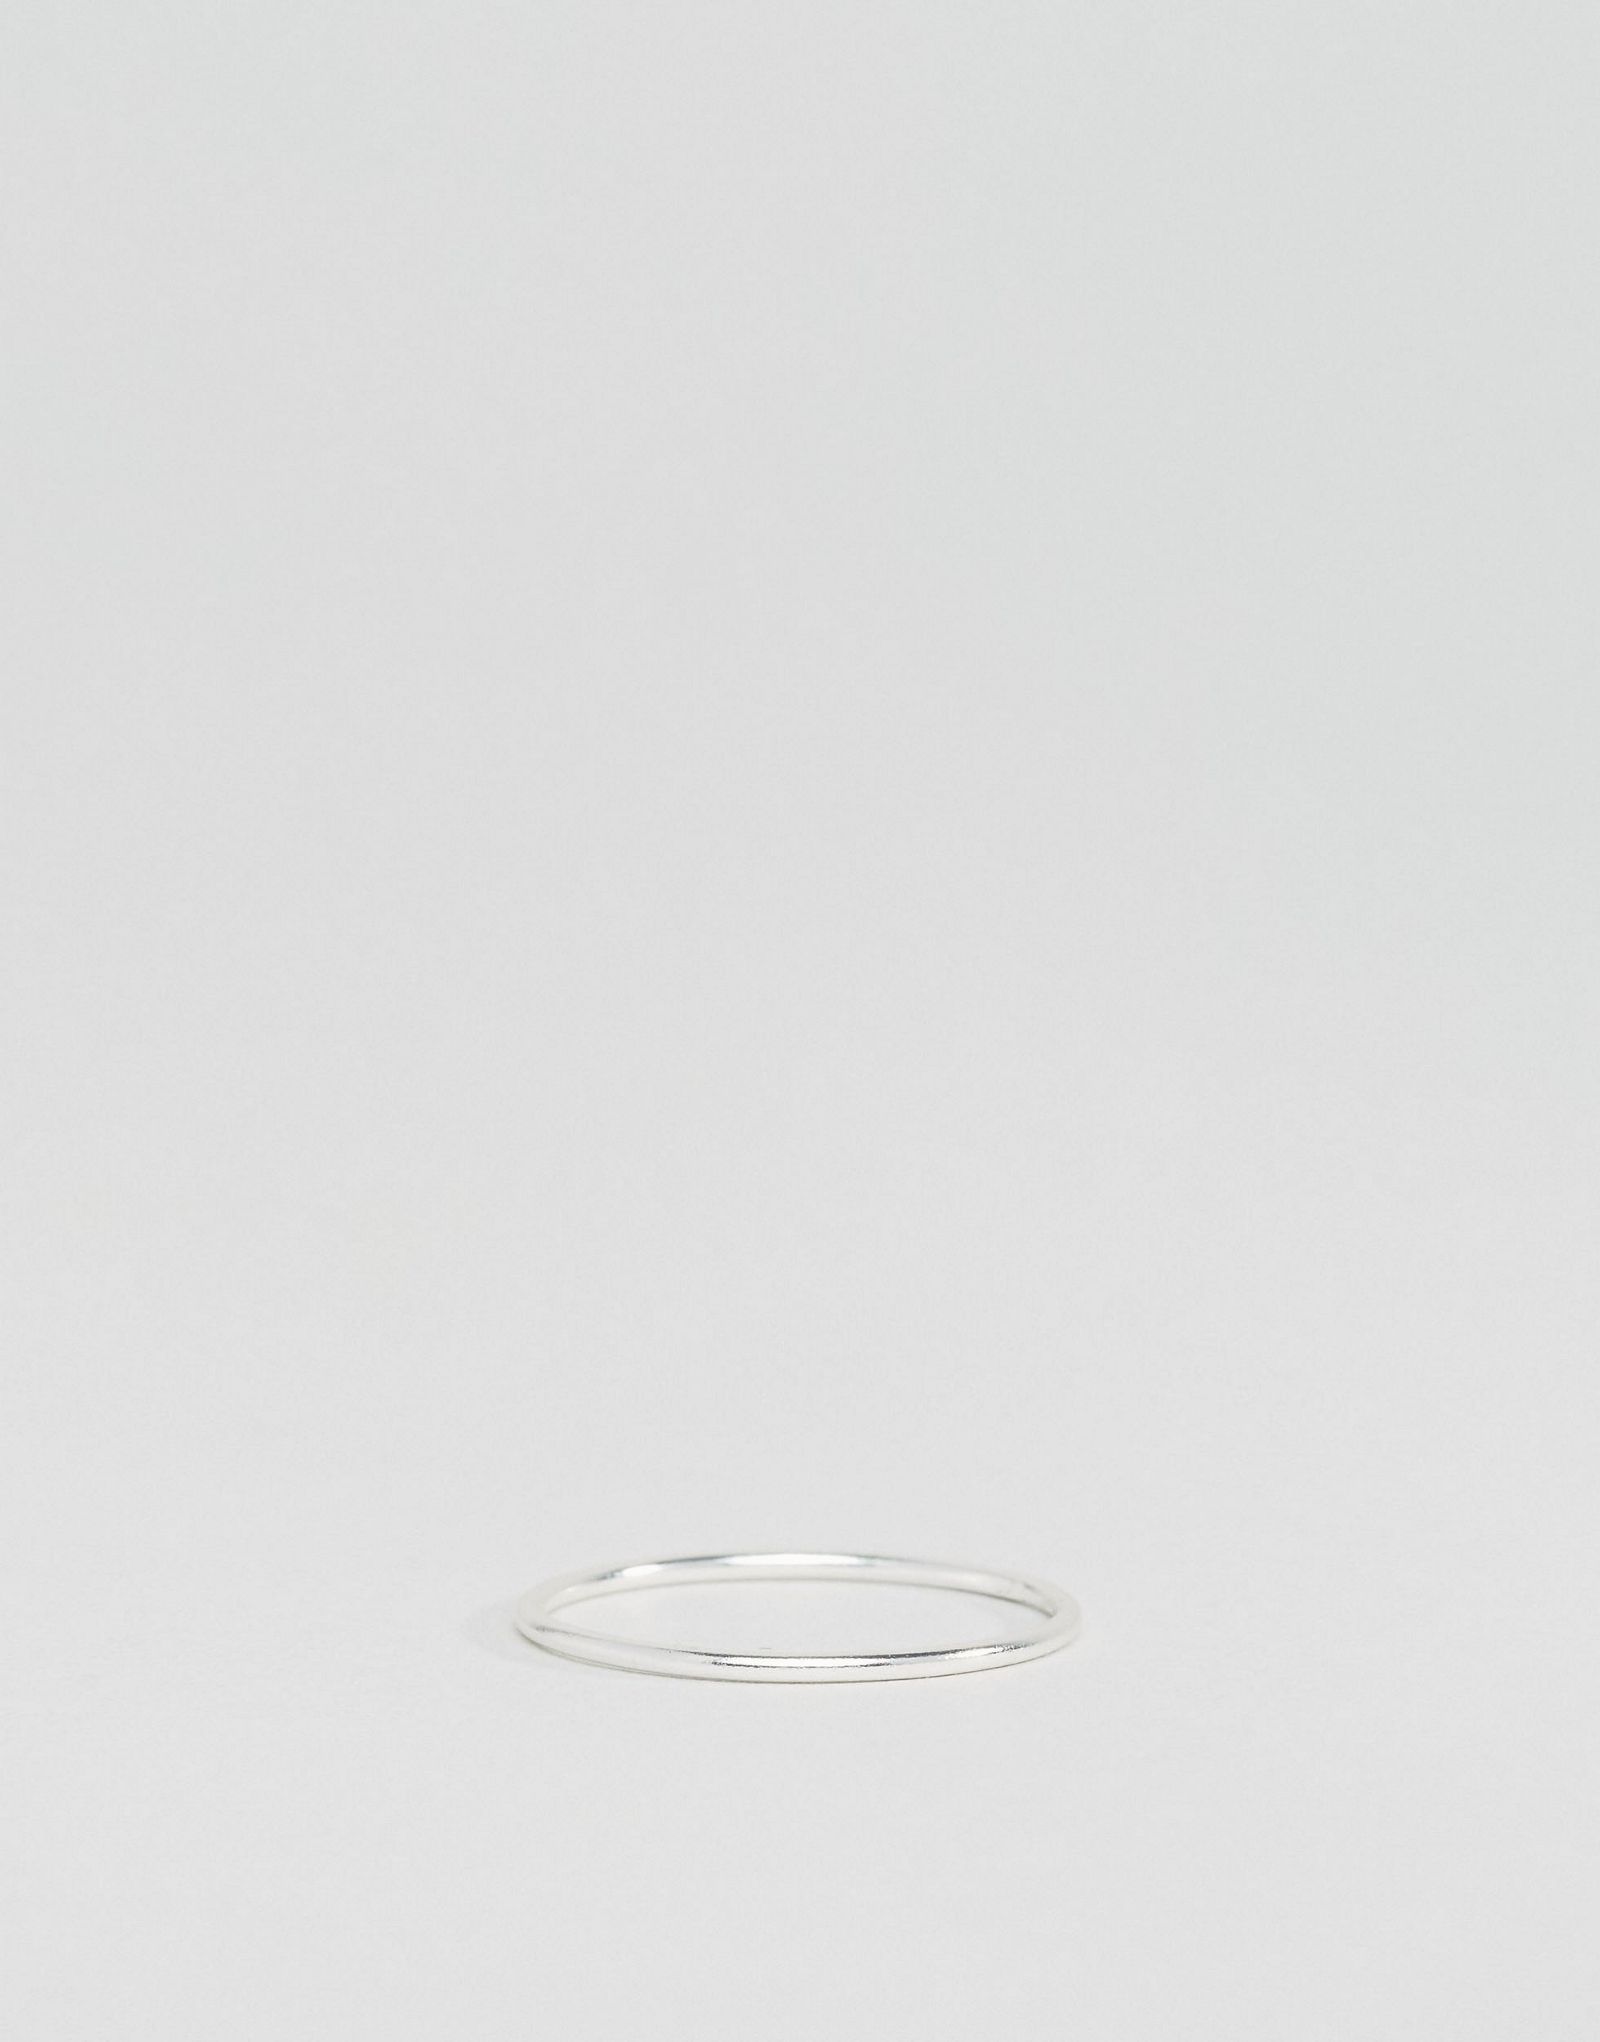 Reclaimed Vintage Sterling Silver Simple Ring